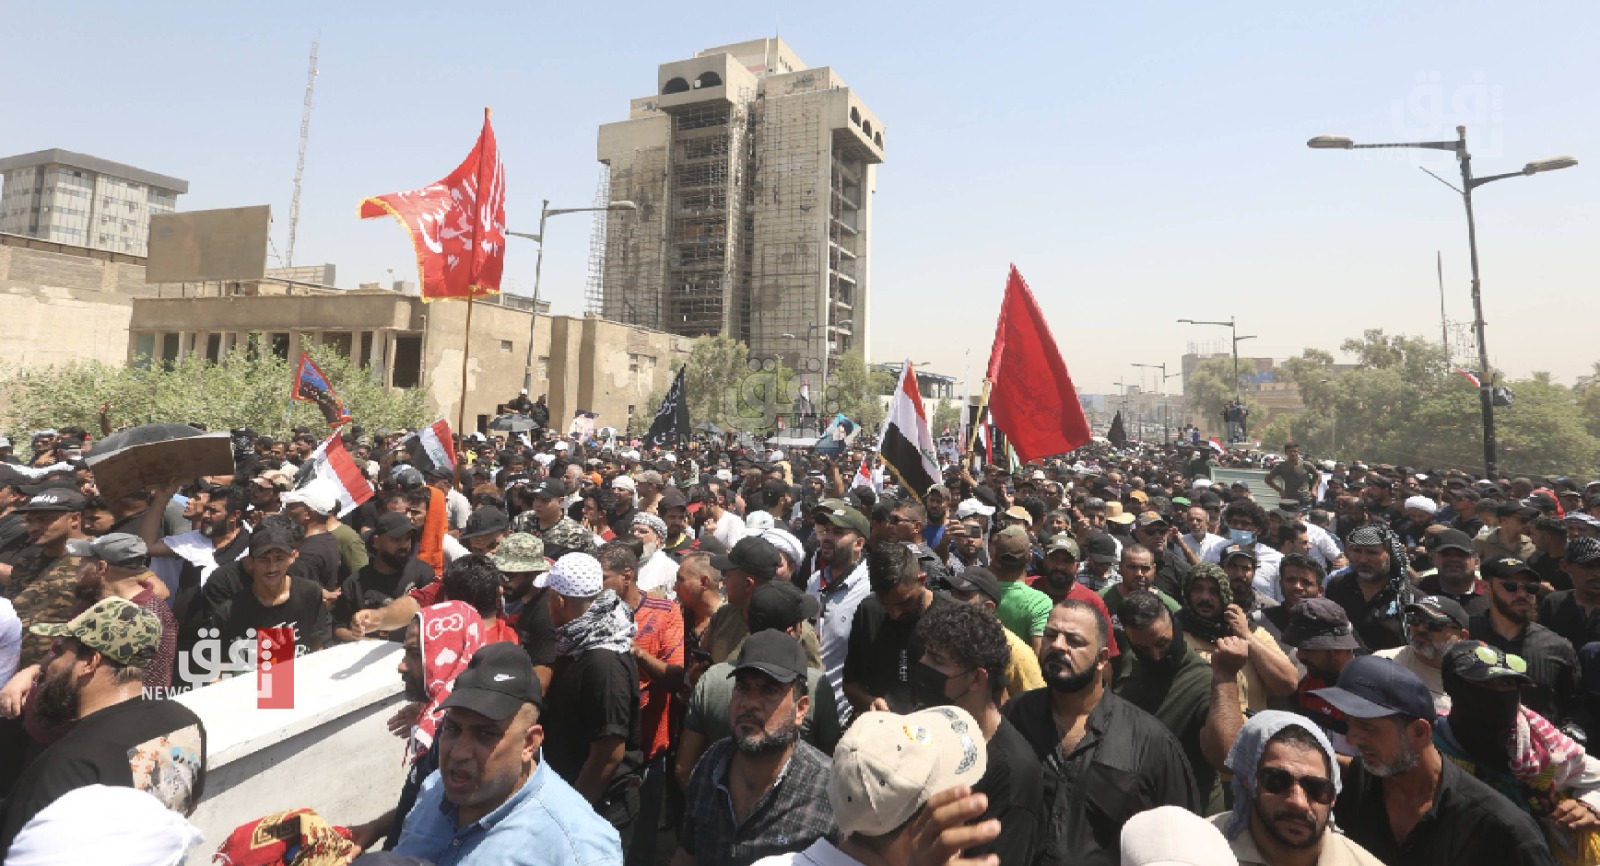 Sadrist figure: to defuse the crisis, CF leaders shall follow al-Sadr steps and retire